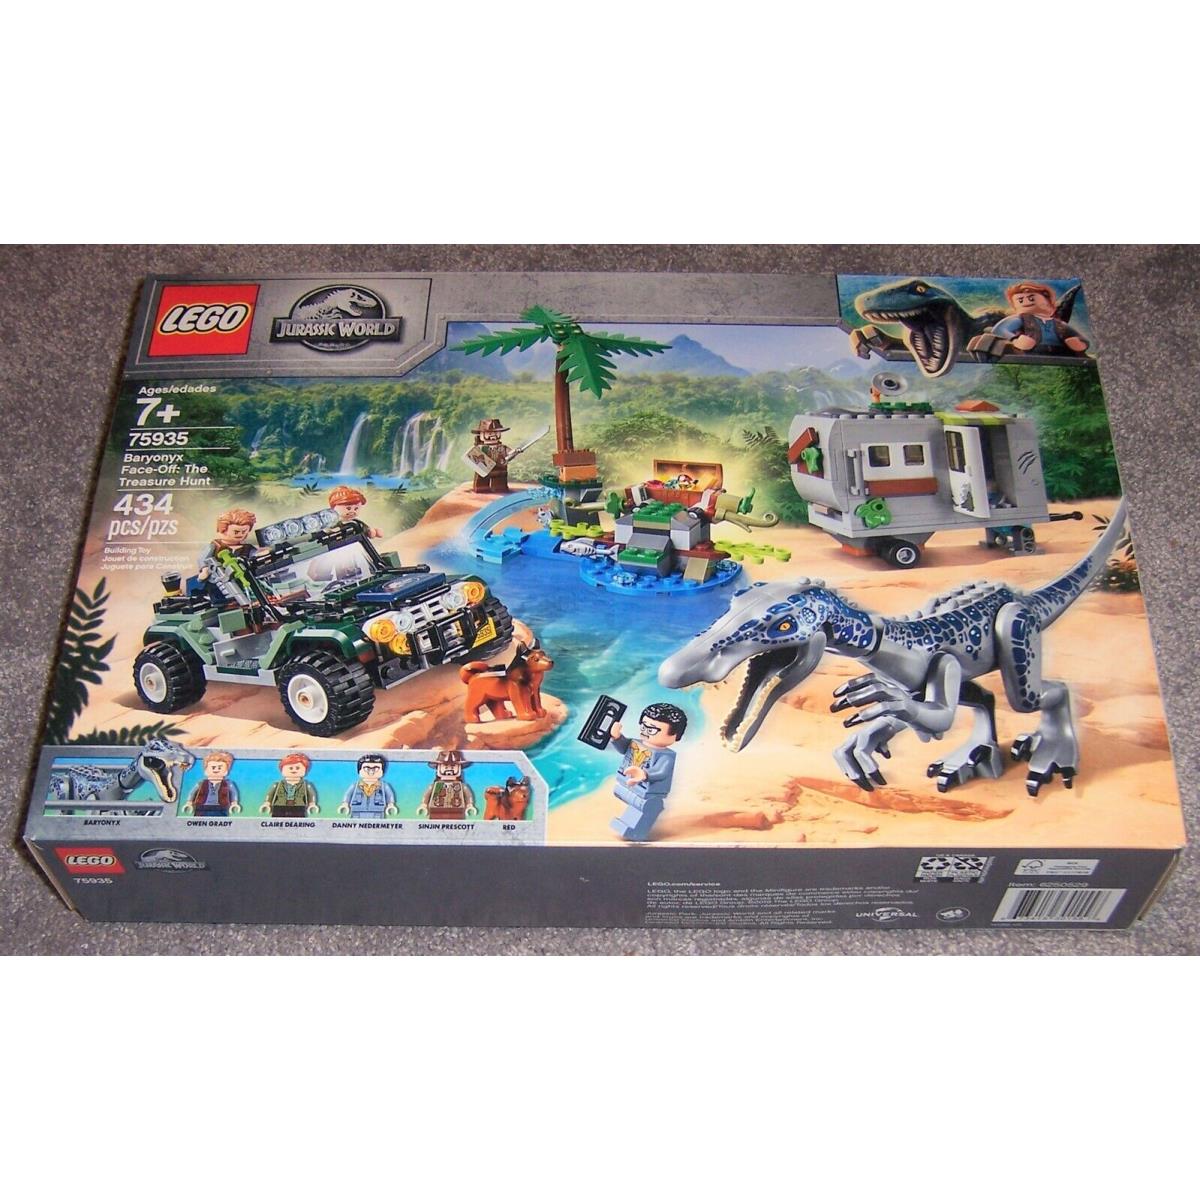 Lego Jurassic World Baryonyx Face-off: The Treasure Hunt 75935 Owen Grady